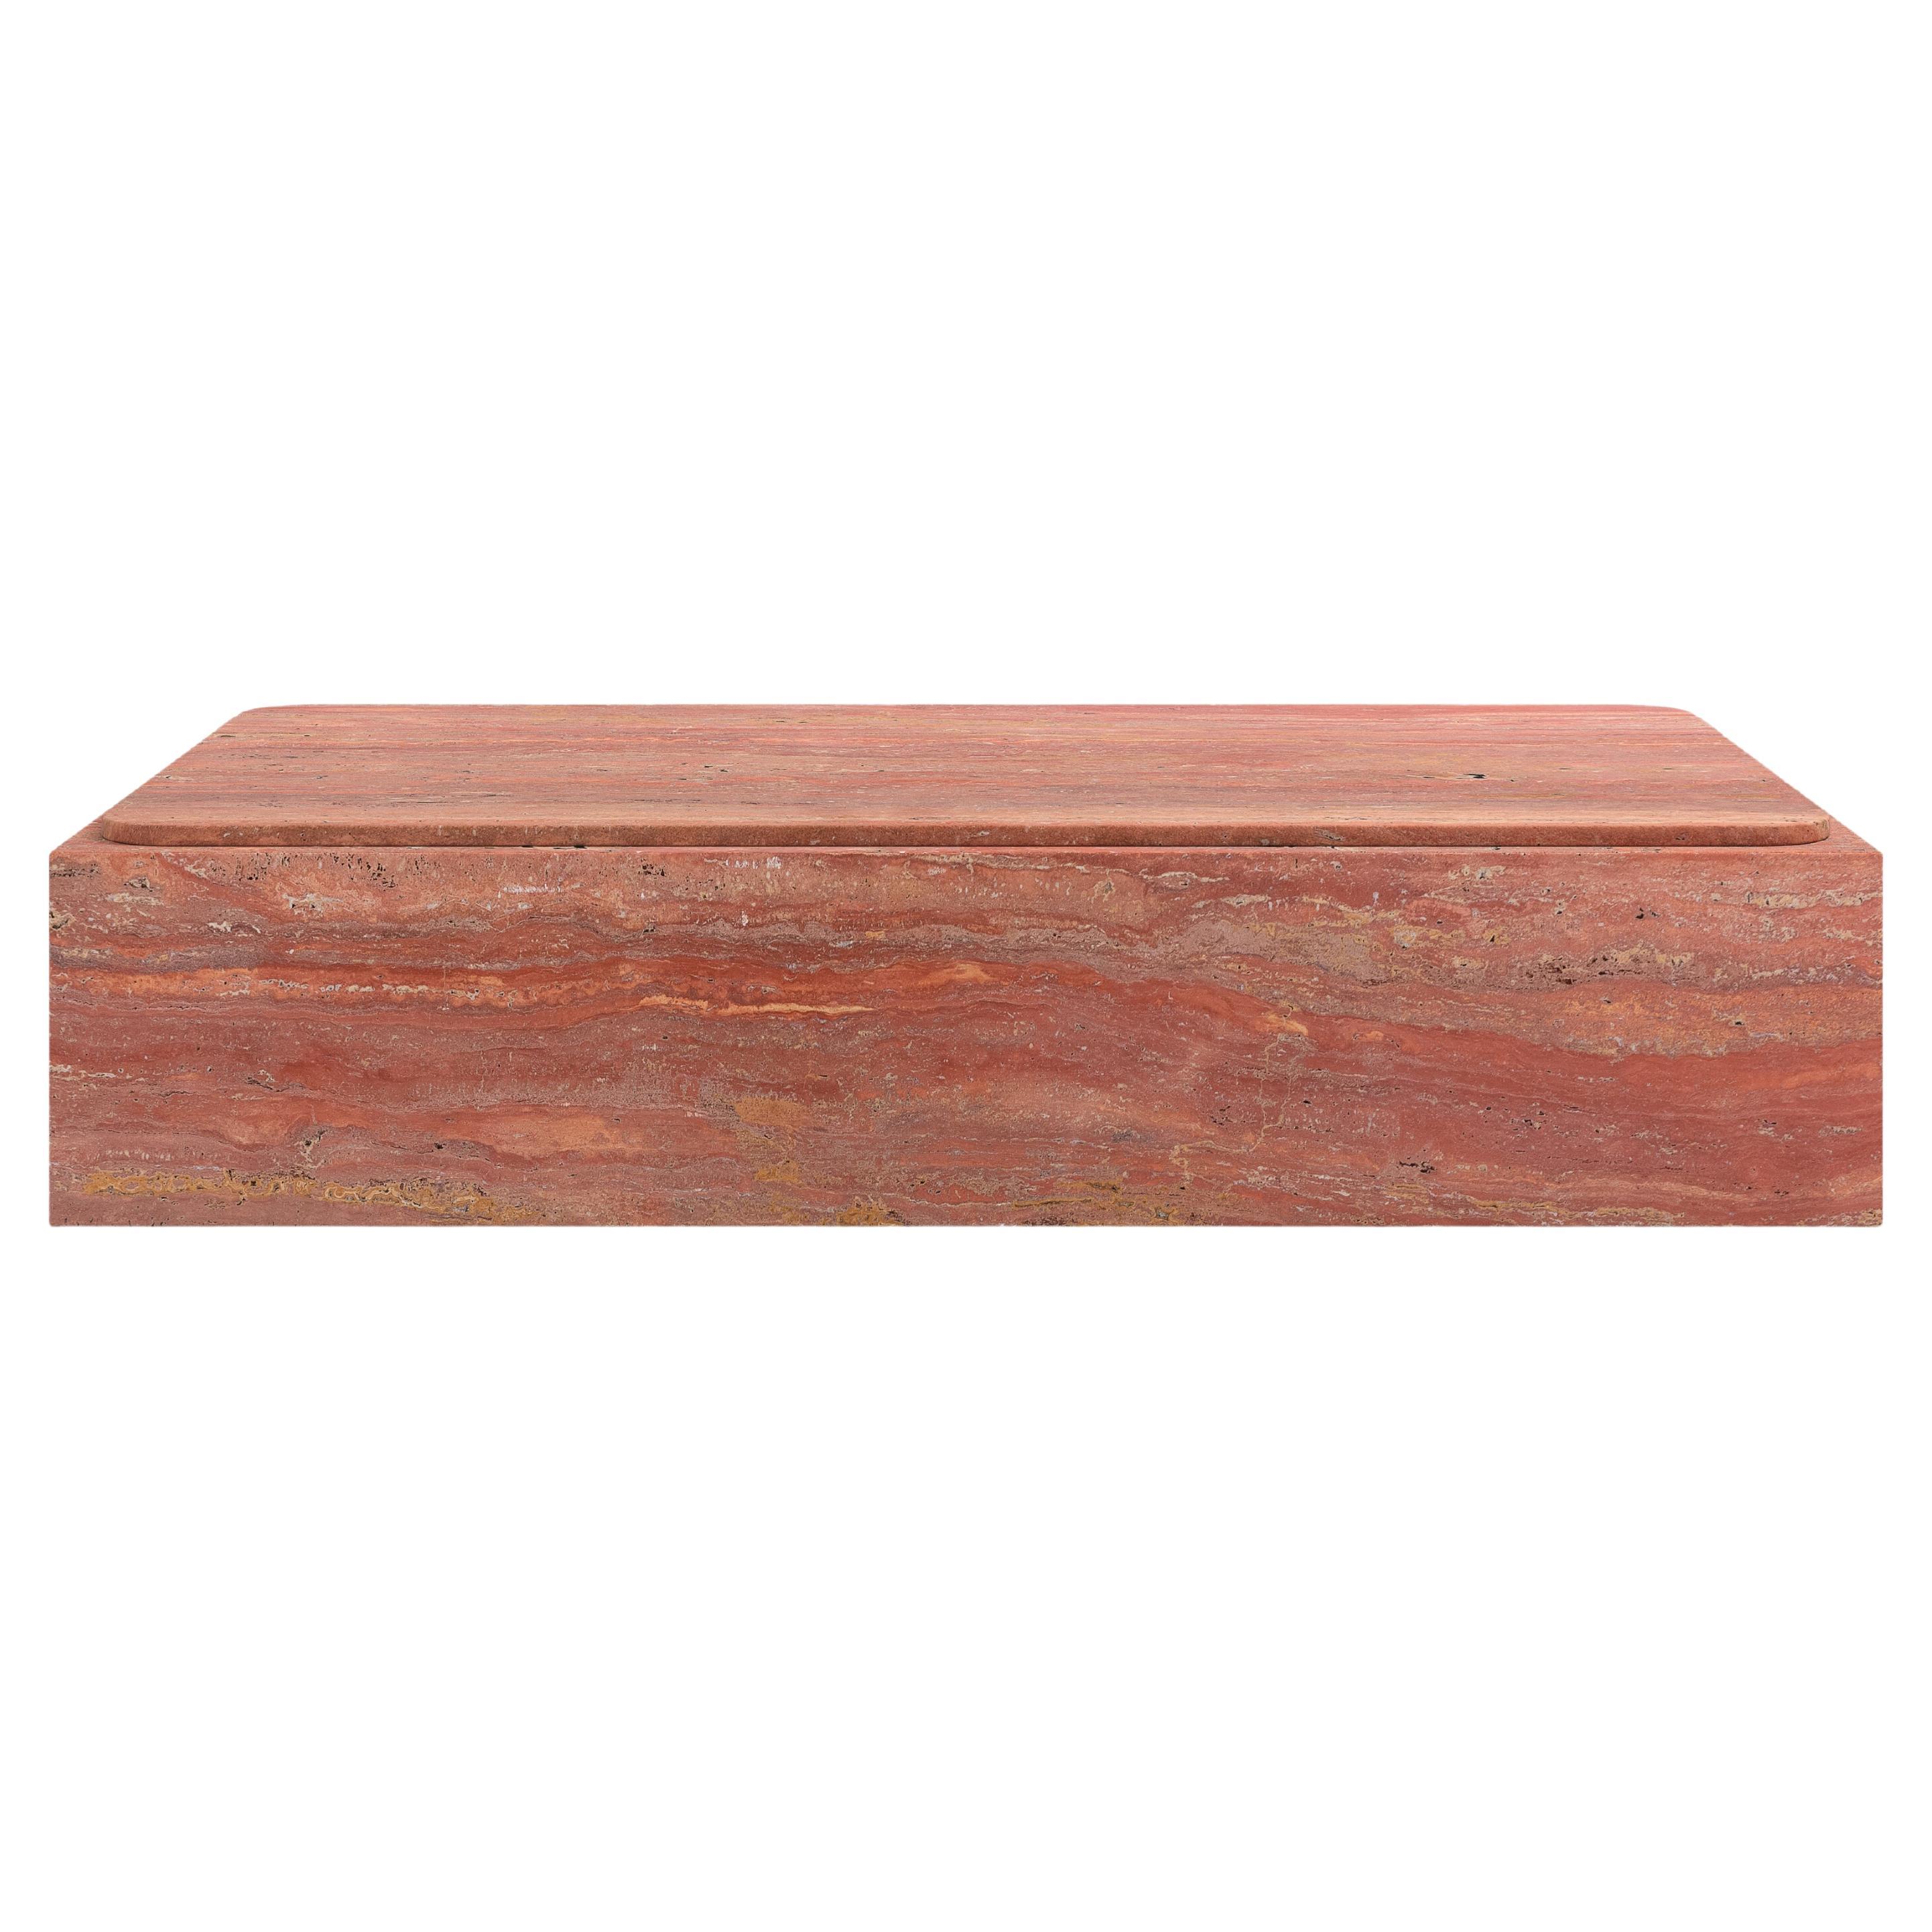 FORM(LA) Table basse à socle rectangulaire Cubo 60L x 36L x 13H Travertino Rosso